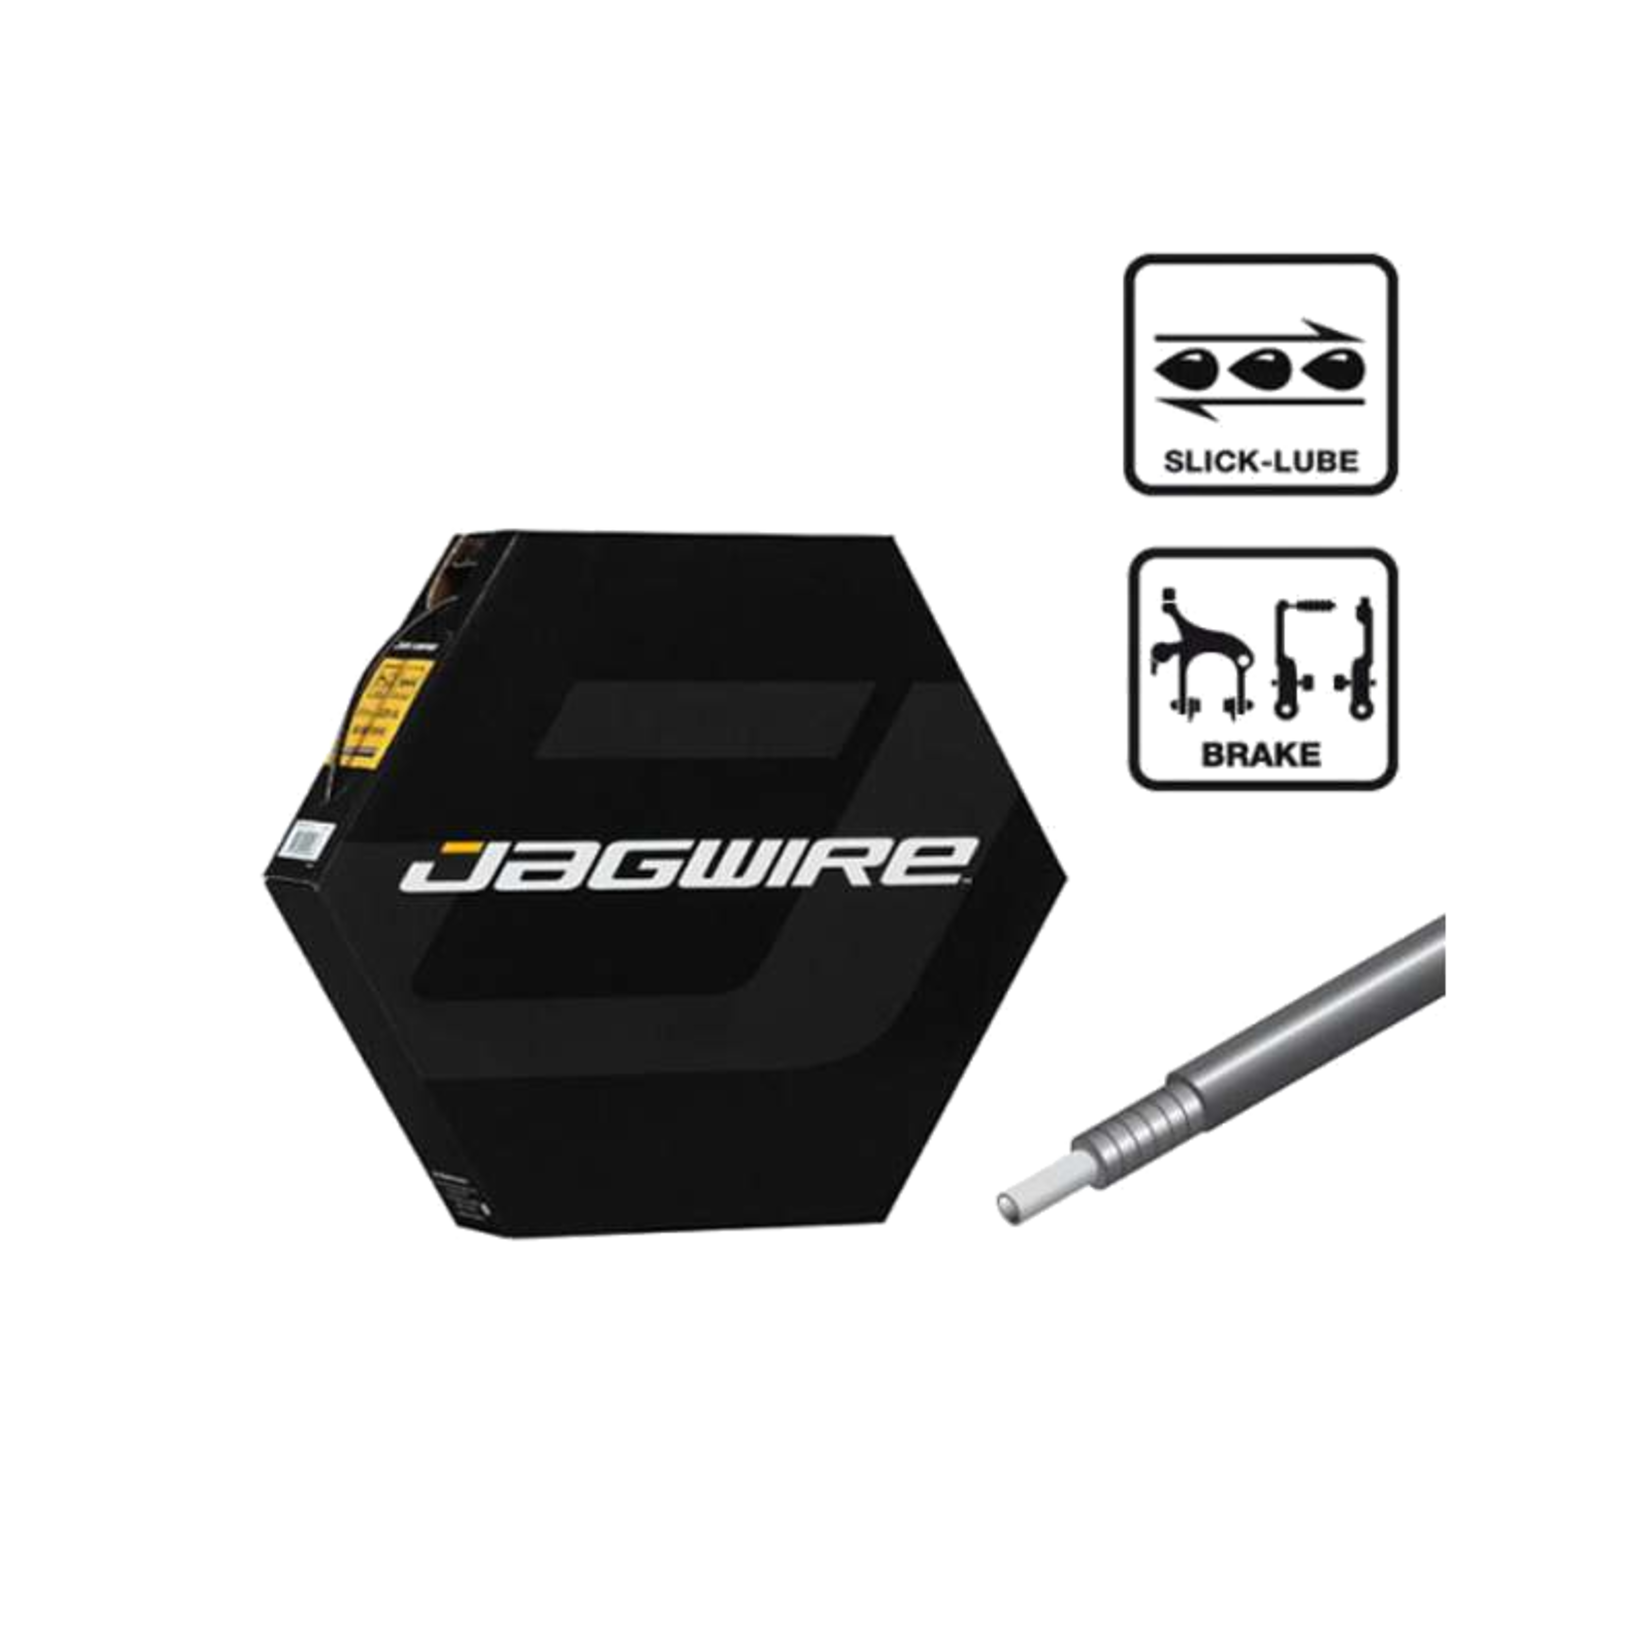 Jagwire 5mm Sport Brake Housing with Slick-Lube Liner 50M File Box Black 